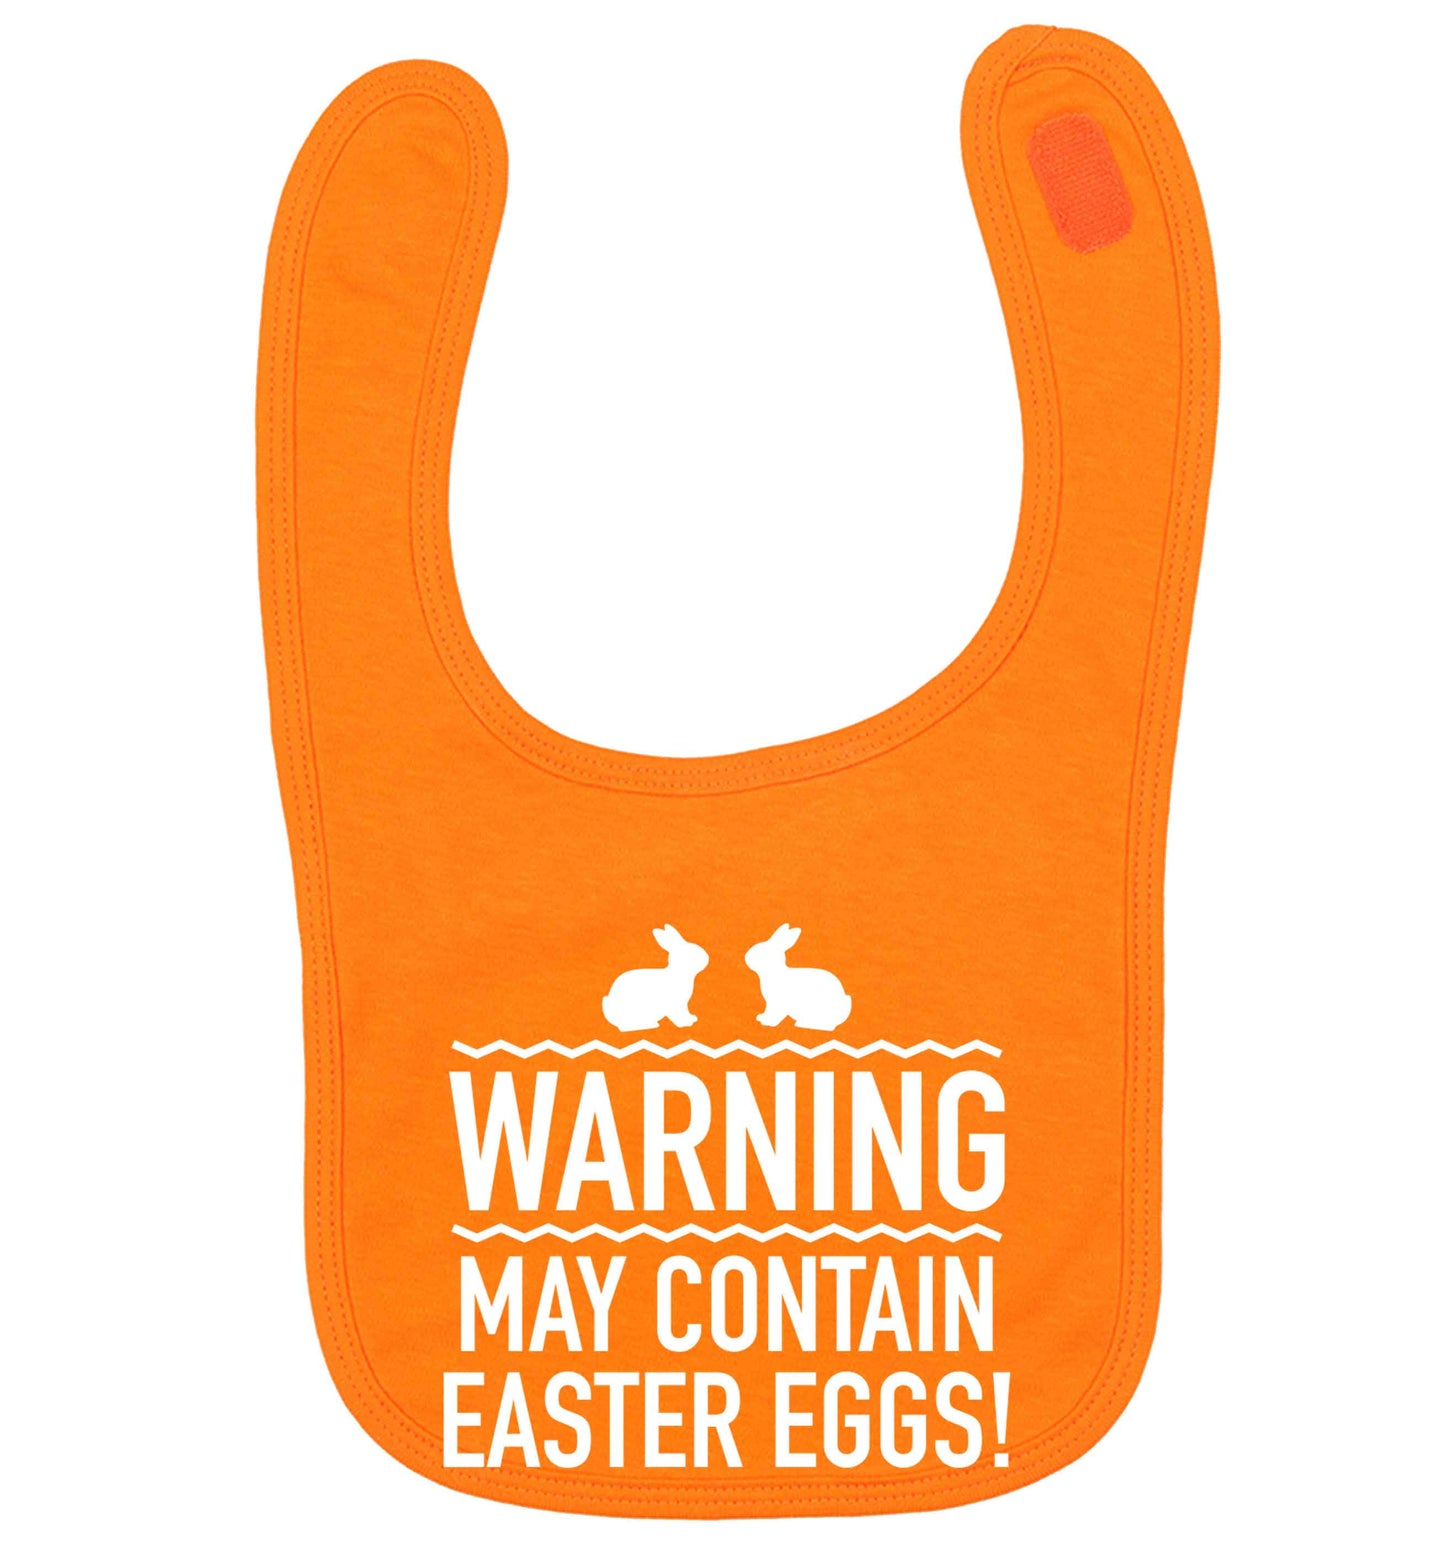 Warning may contain Easter eggs orange baby bib